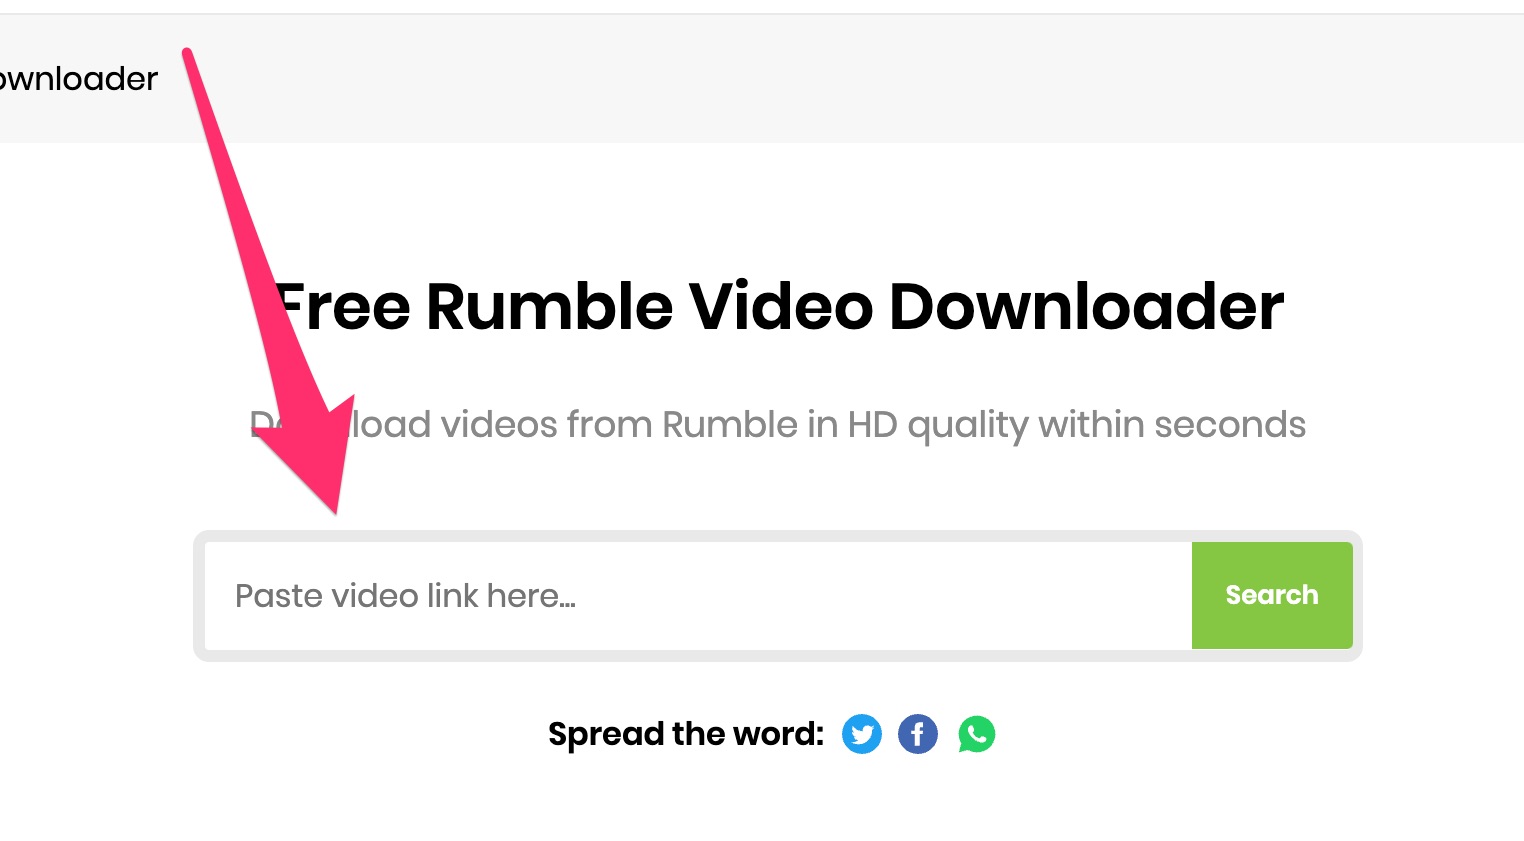 pegue el enlace del video de Rumble en la barra de búsqueda